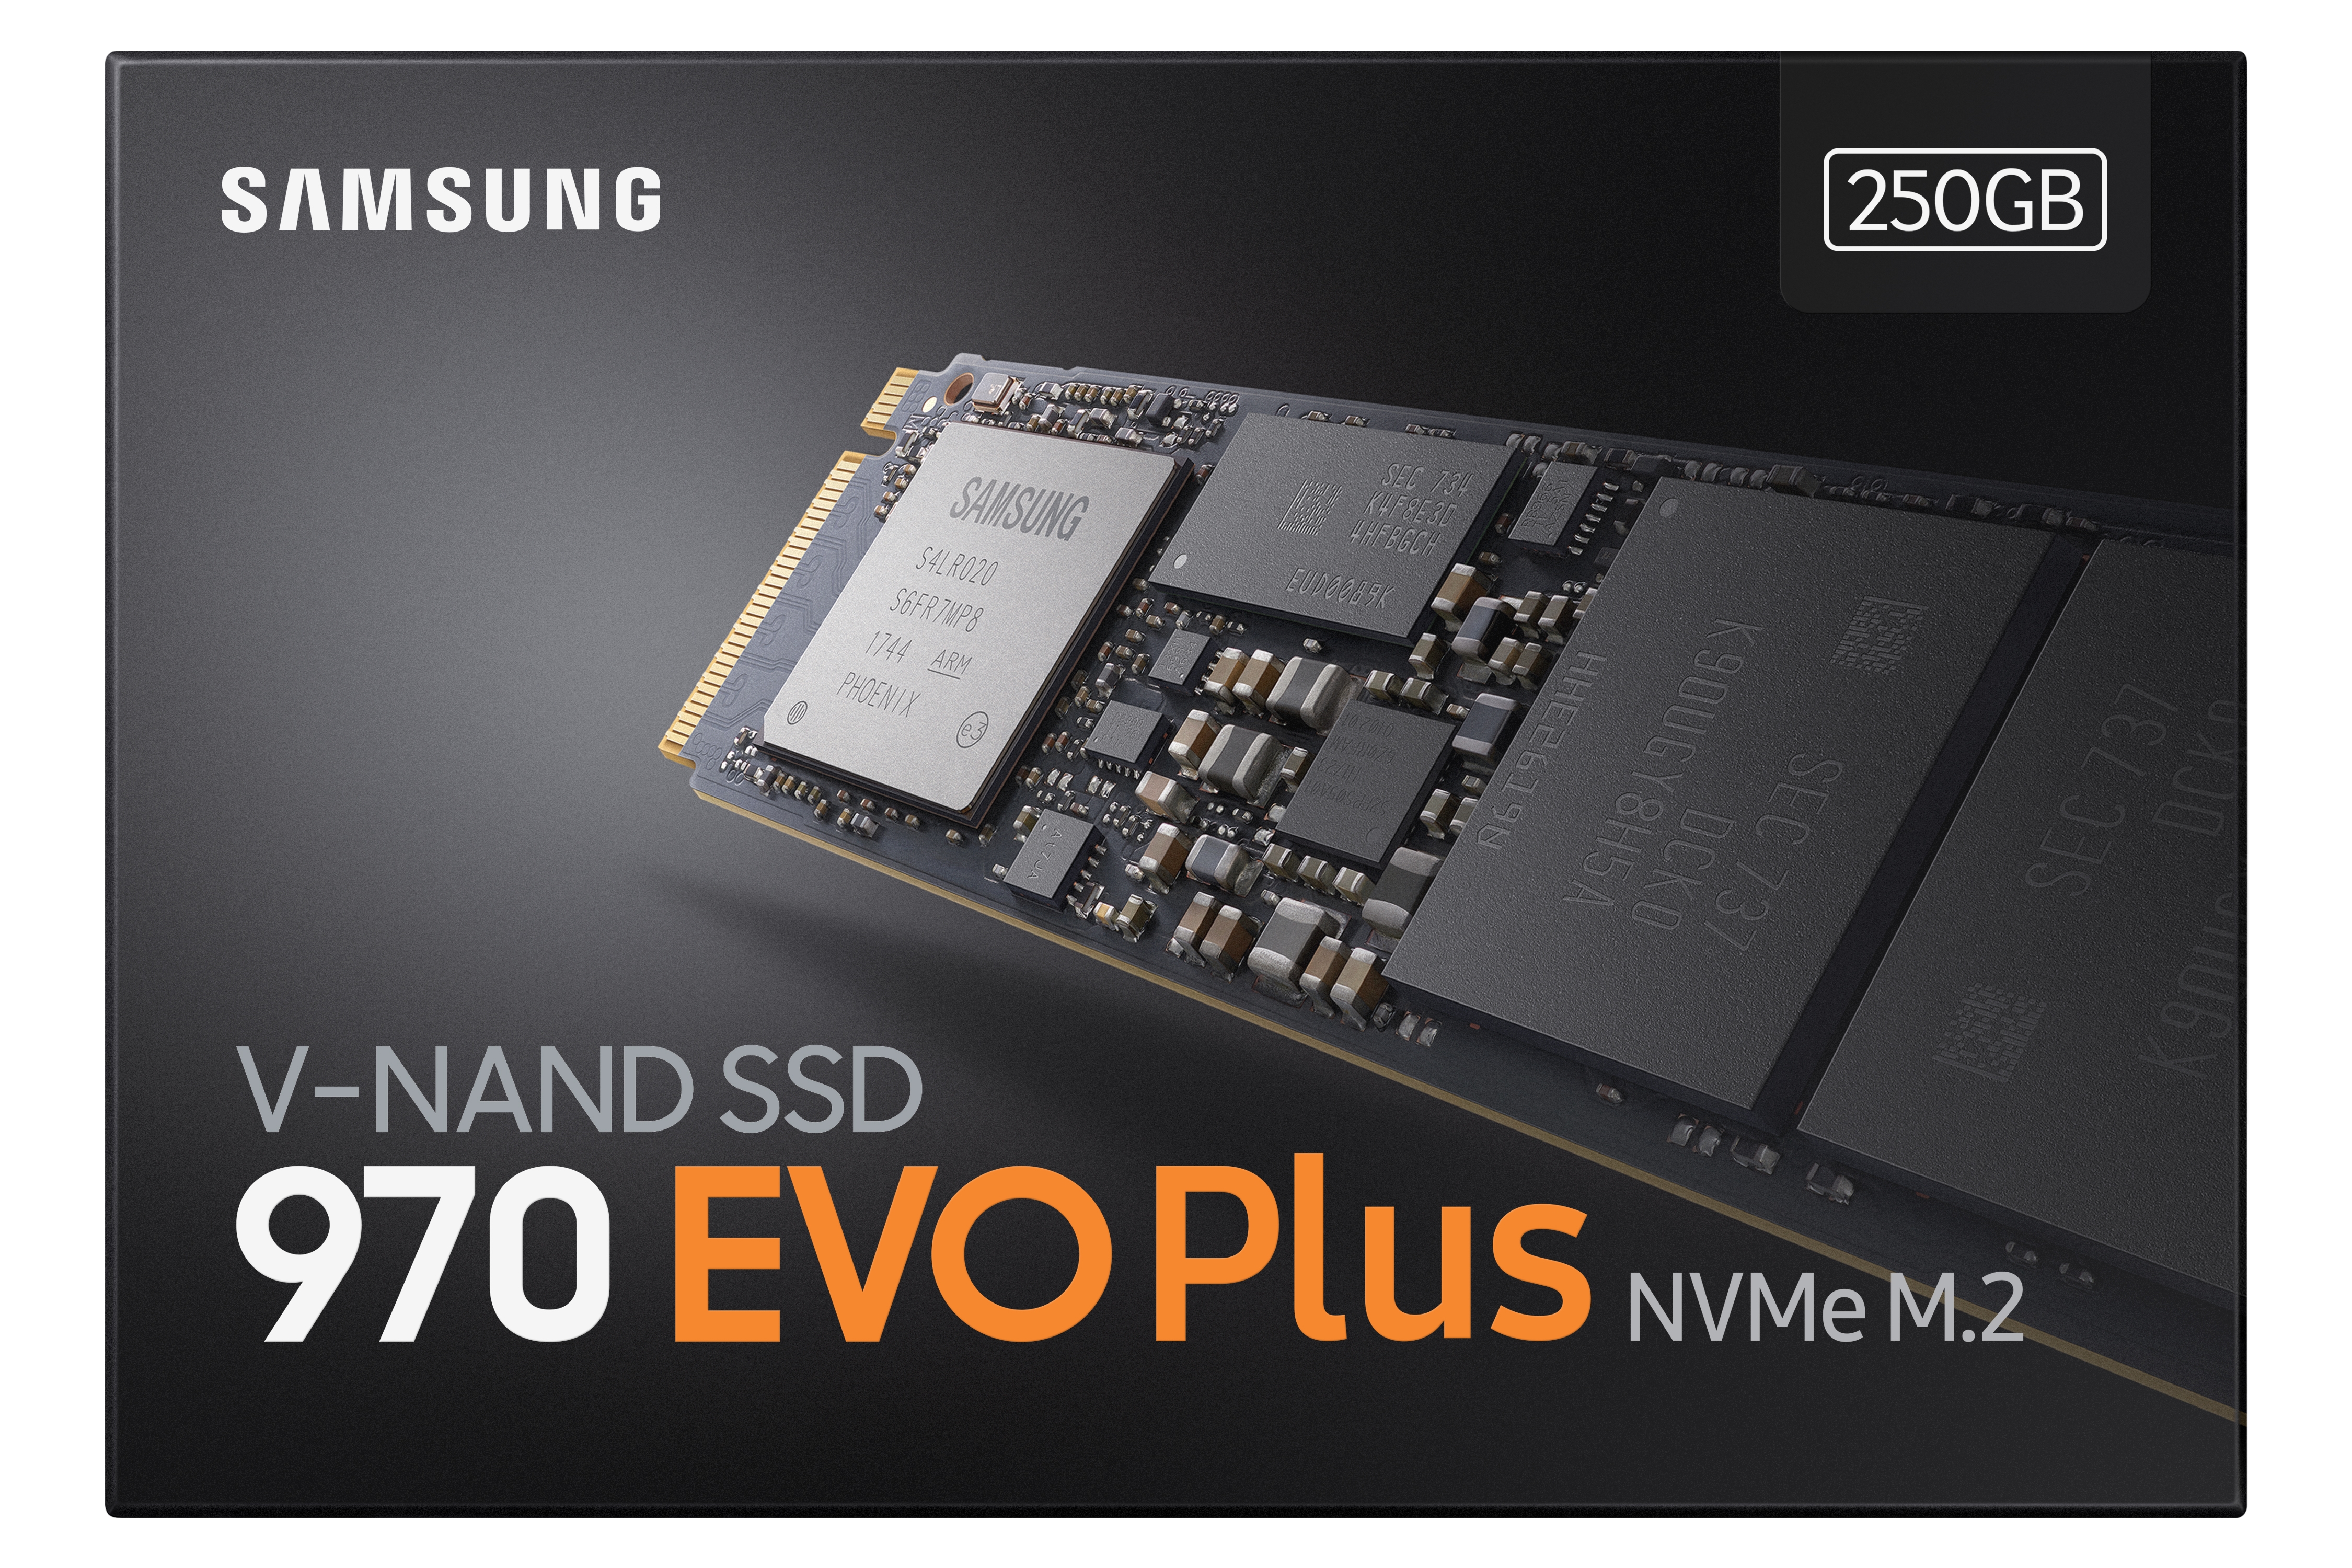 ekstremister hylde Mose SSD 970 EVO Plus NVMe® M.2 250GB Memory & Storage - MZ-V75S250B/AM |  Samsung US